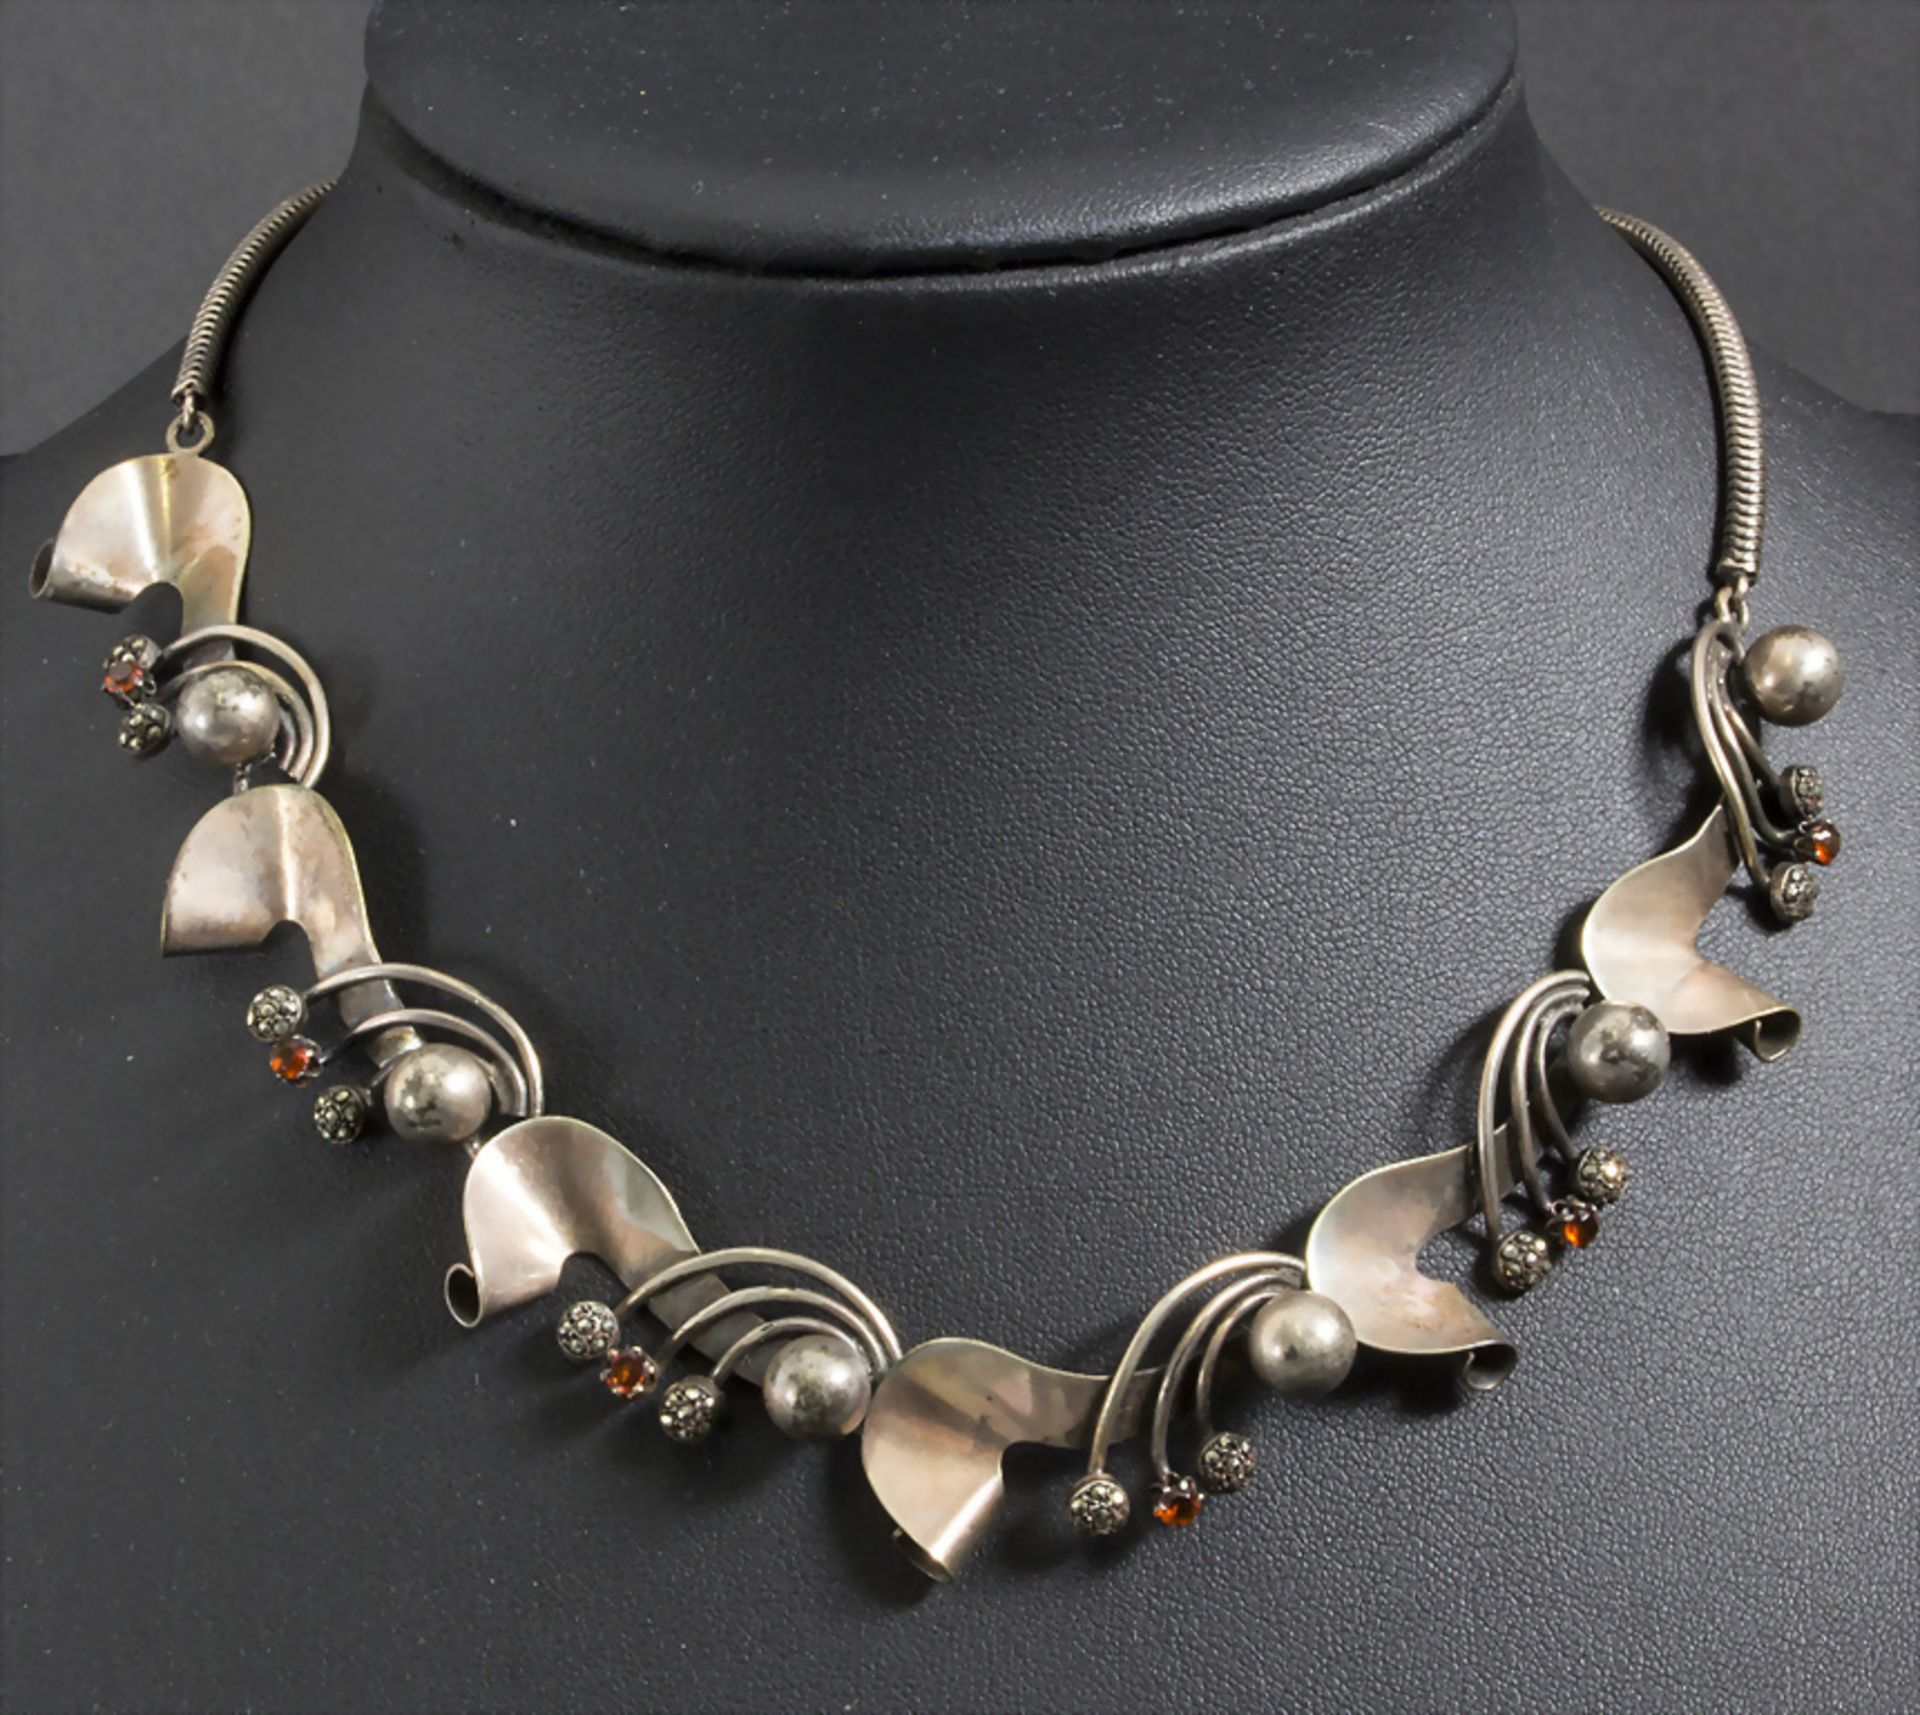 Designer Silber Collier / A designer silver necklace